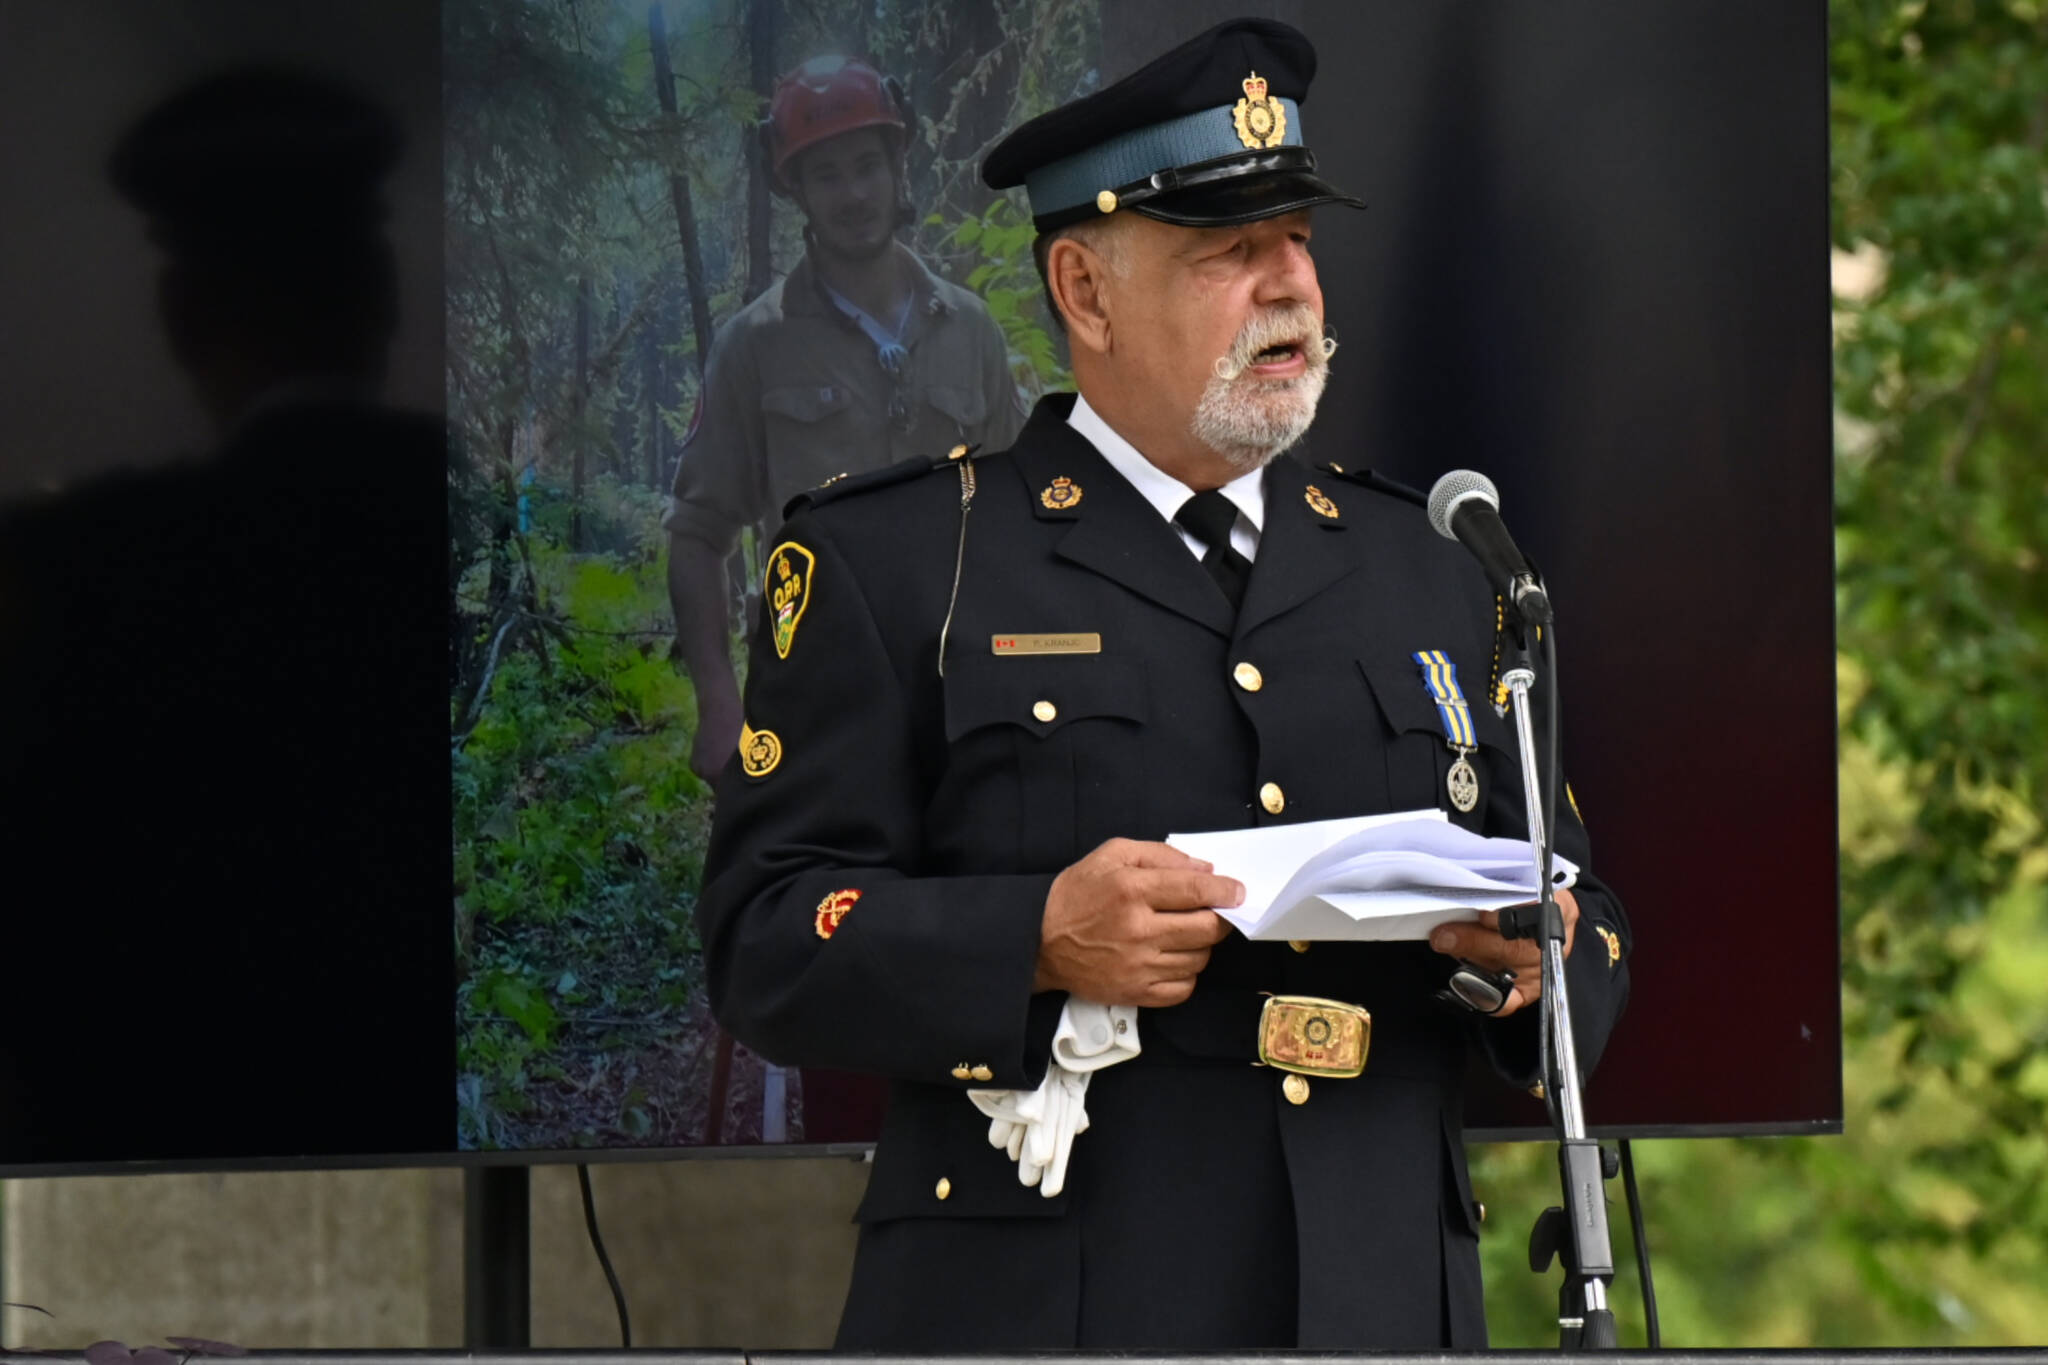 Paul Kranjc, a retired member of the Ontario Provincial Police, speaks on behalf of fallen firefighter Zak Muise’s family. (Brennan Phillips - Western News)